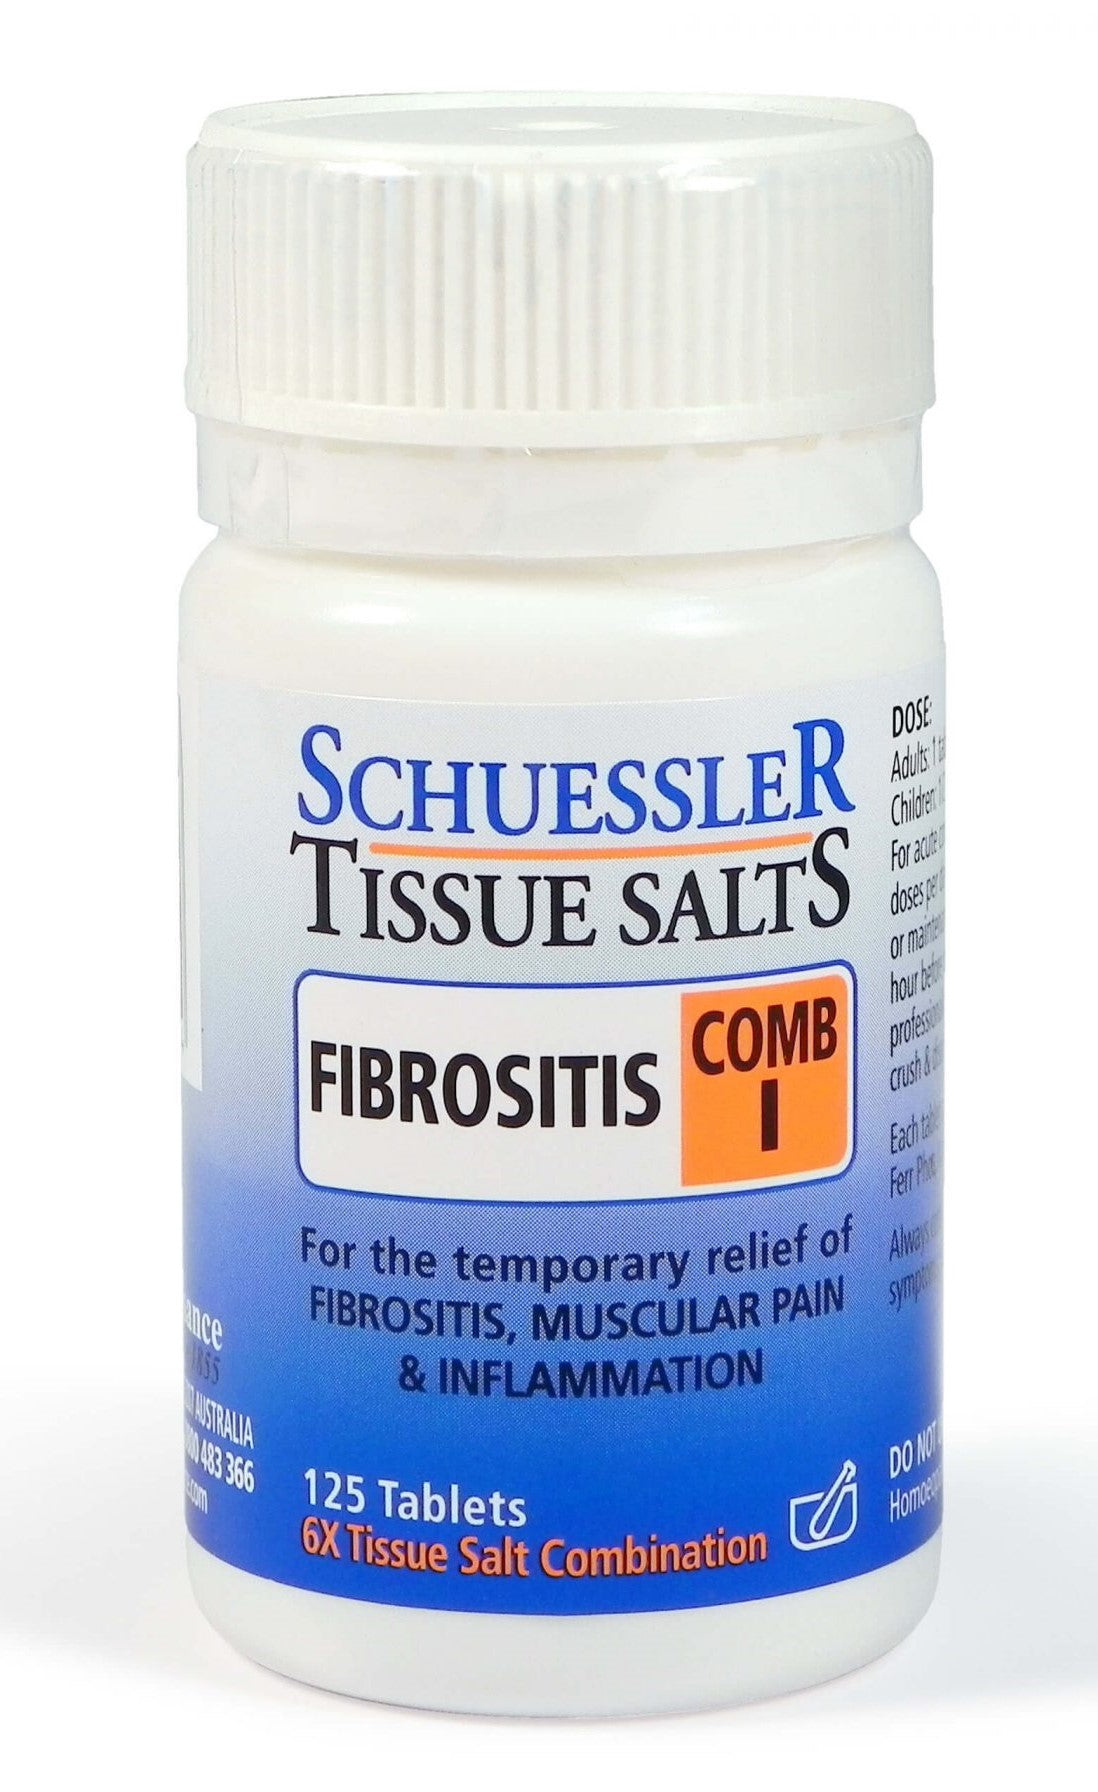 Schuessler Tissue Salts Fibrositis Comb I Tablets 125